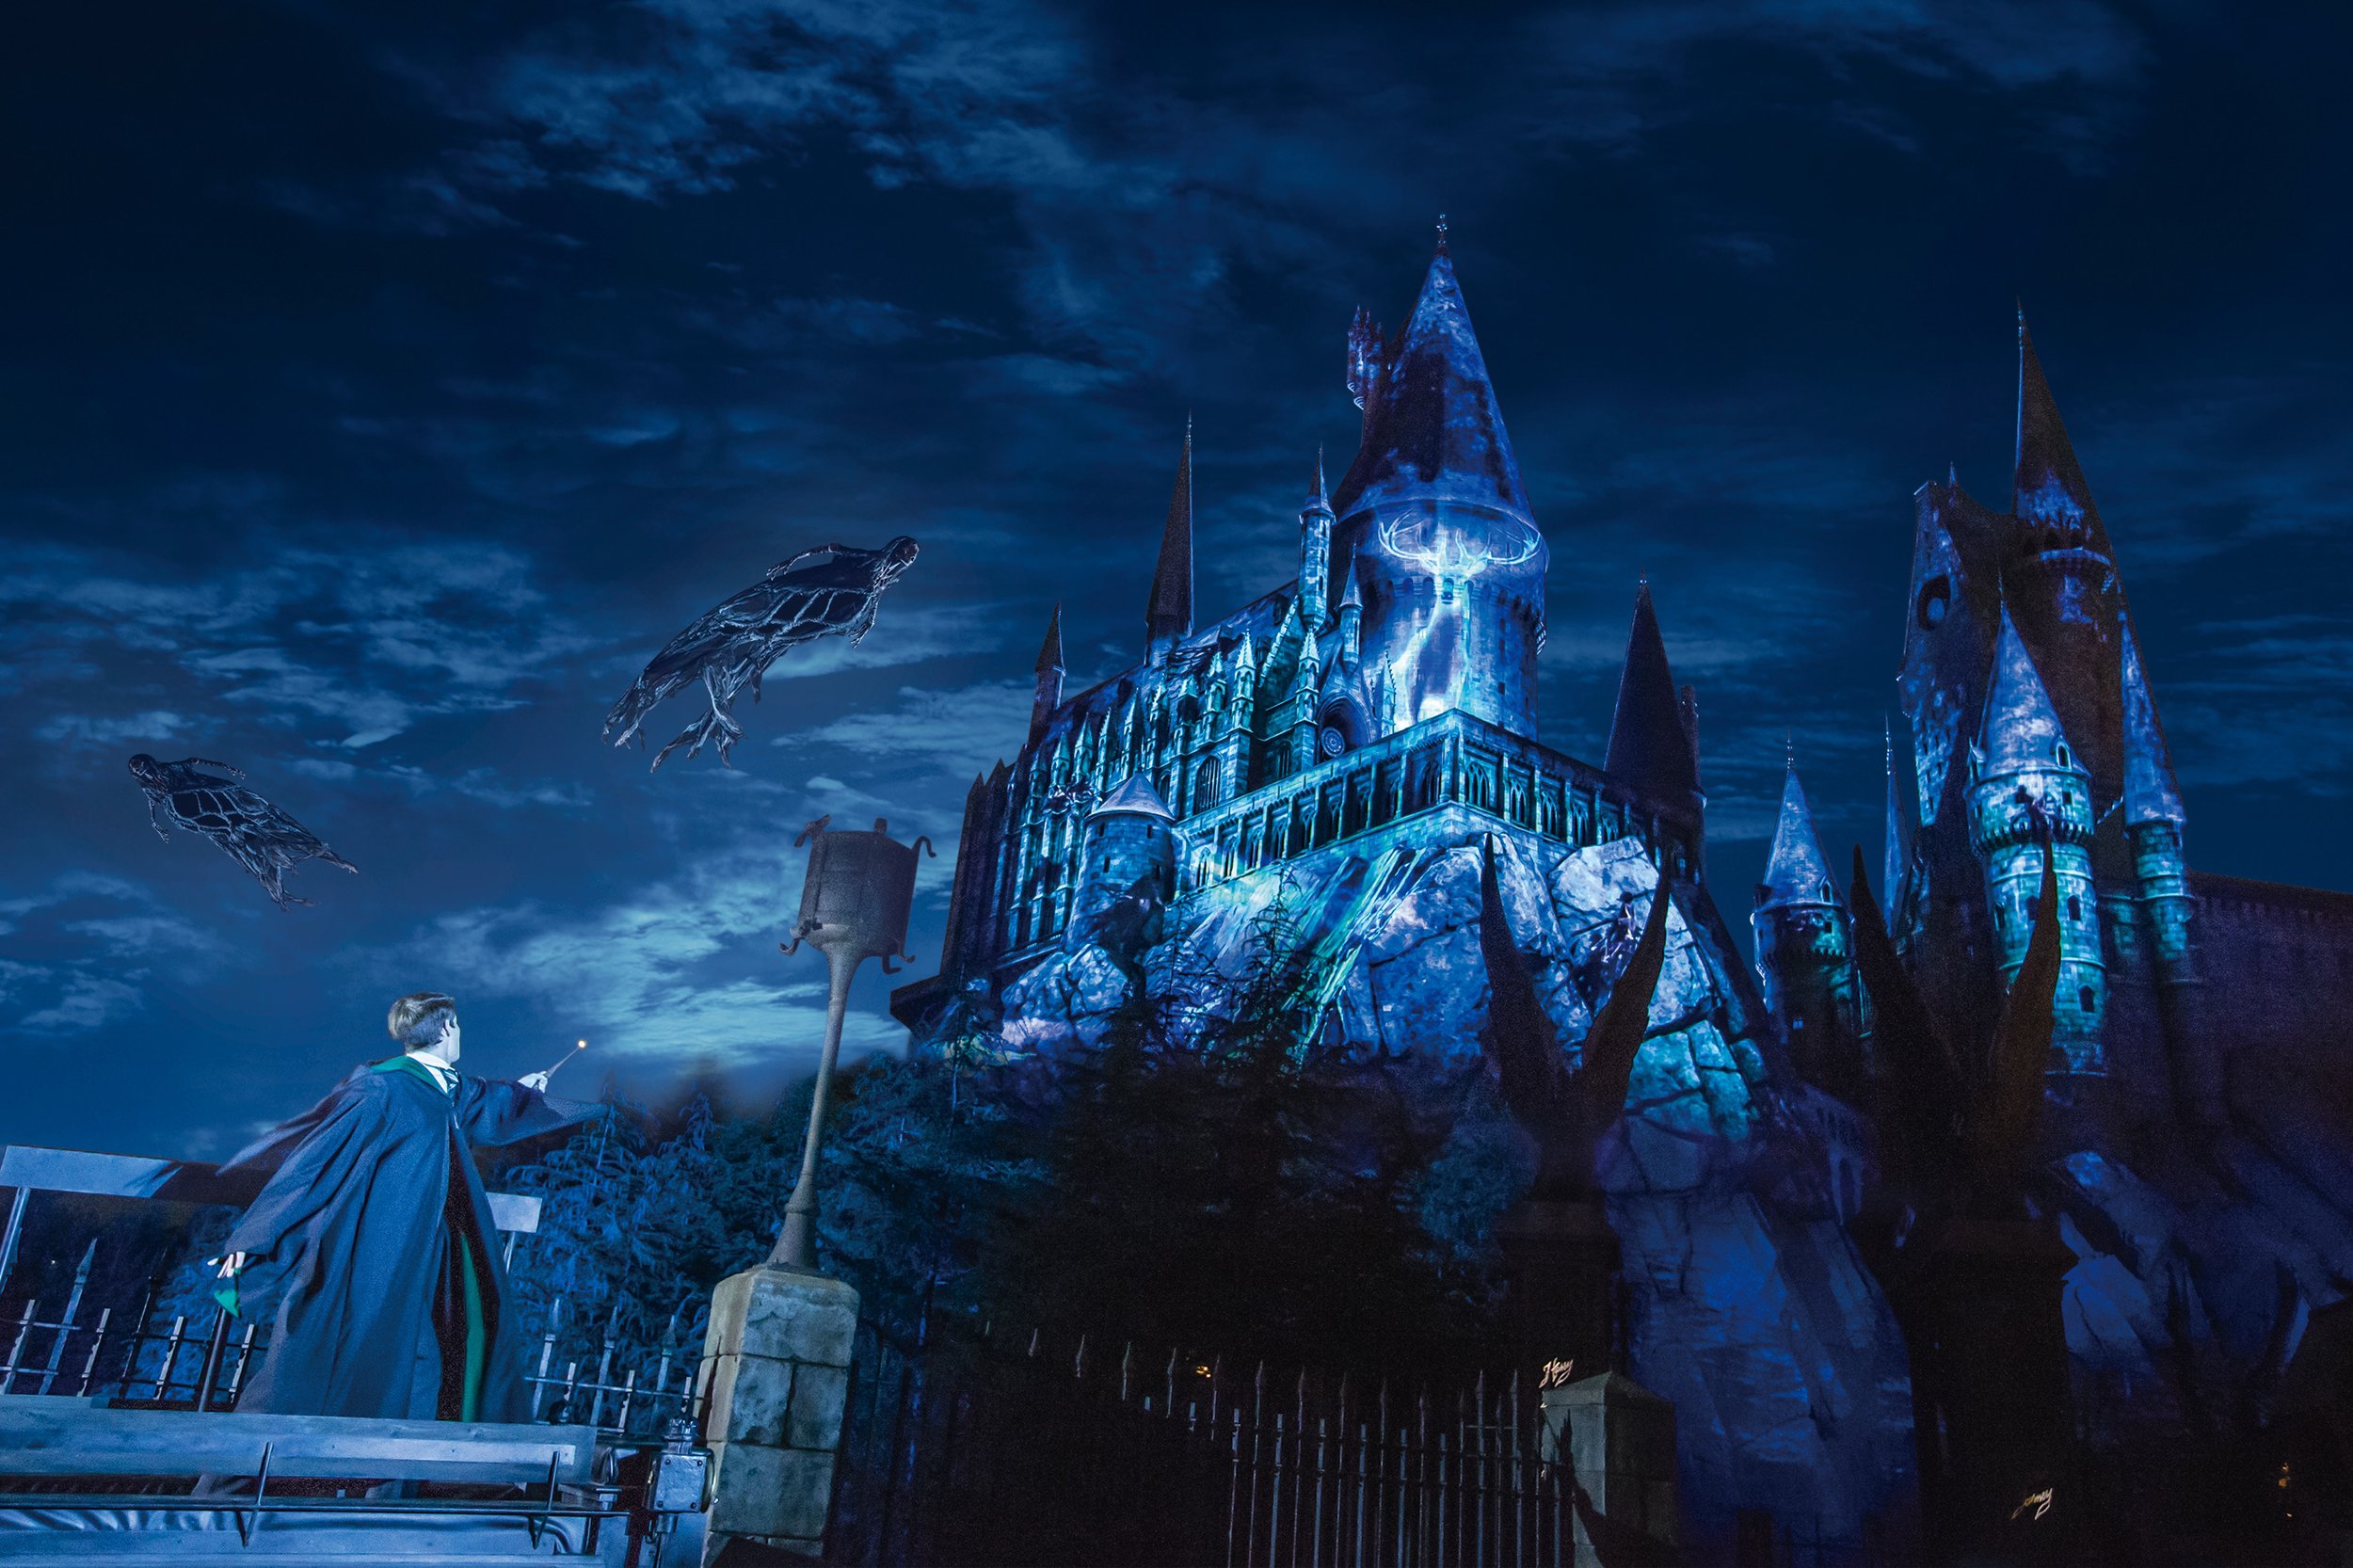 Download Harry Potter Dementors Hogwarts Aesthetic Wallpaper | Wallpapers .com